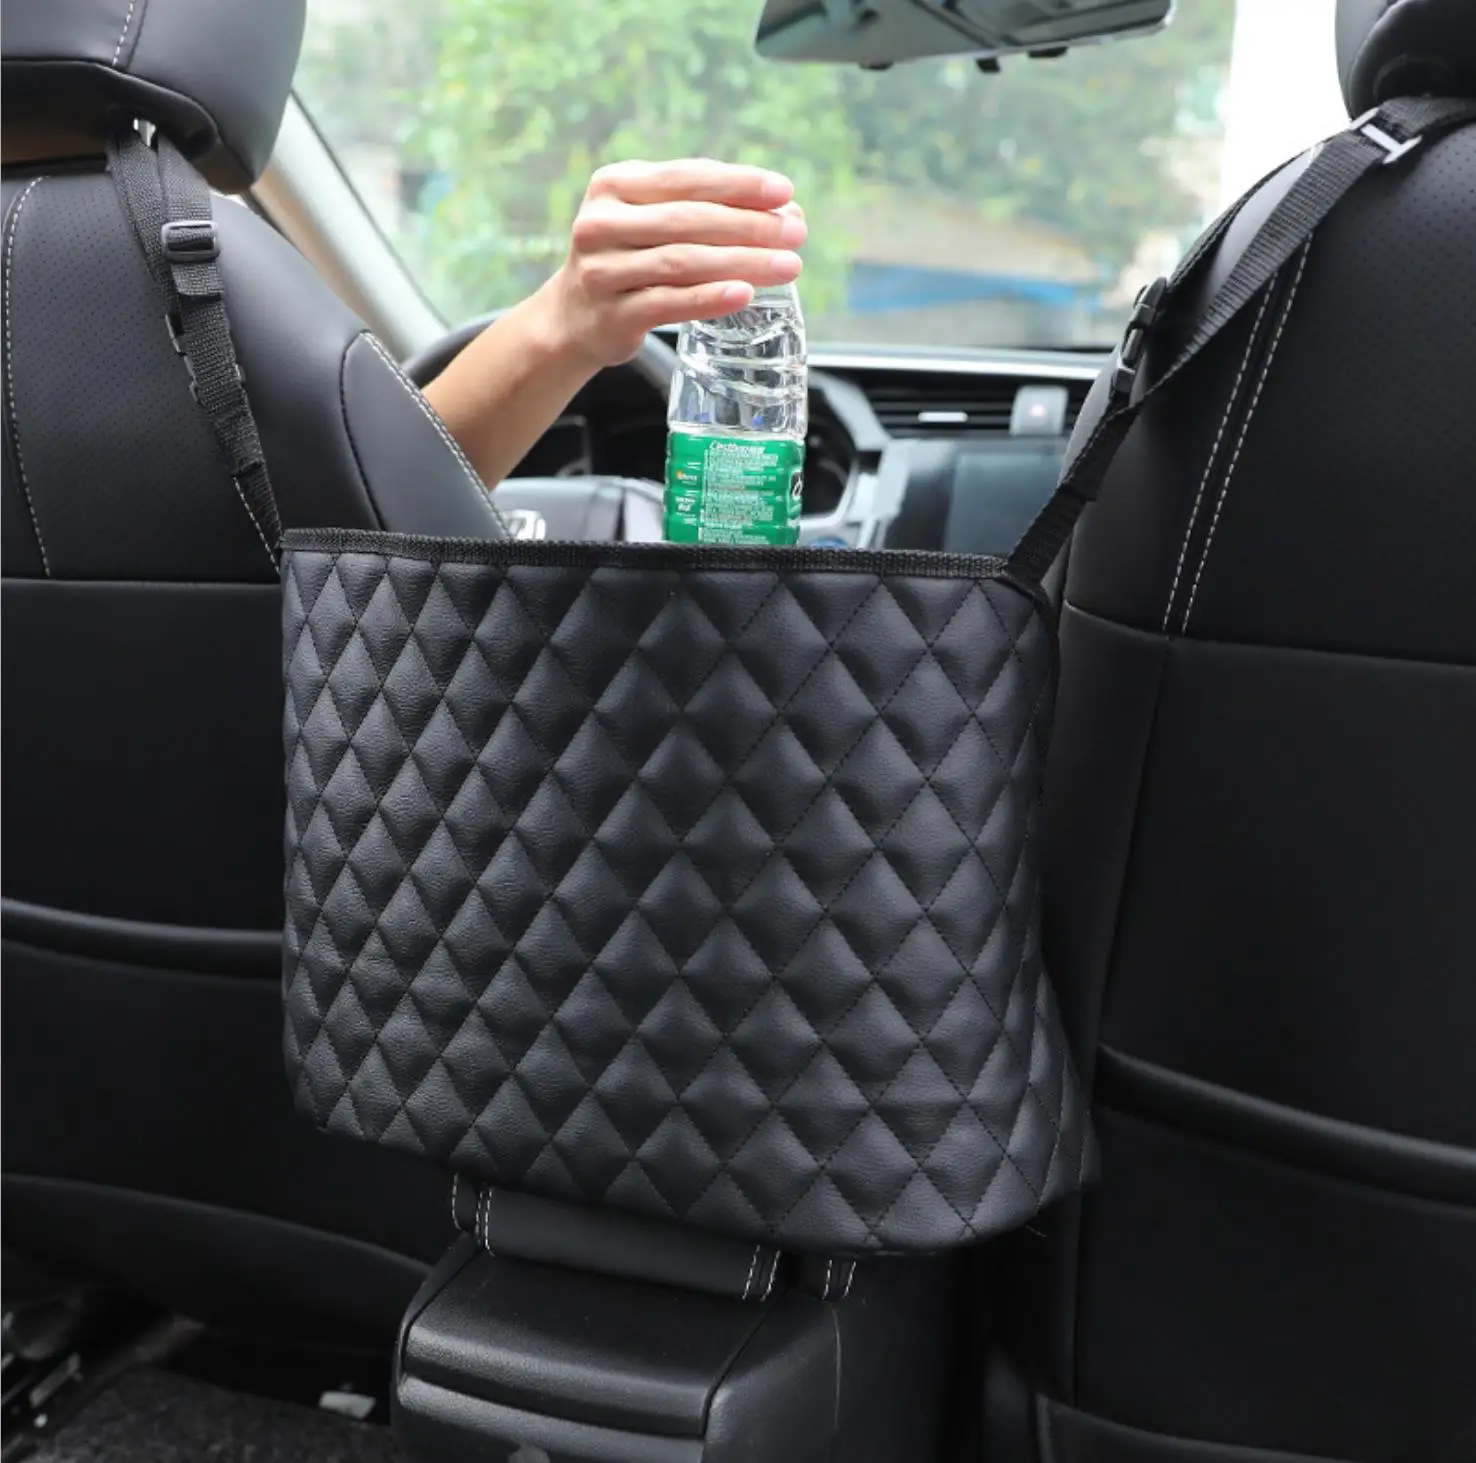  AMEIQ Car Organizer, Storage Bag Between Front Seats, Car Purse  Holder, Handbag Tissue Holder, Dog Pet Barrier, Pocket Container, Black  Leather : Automotive